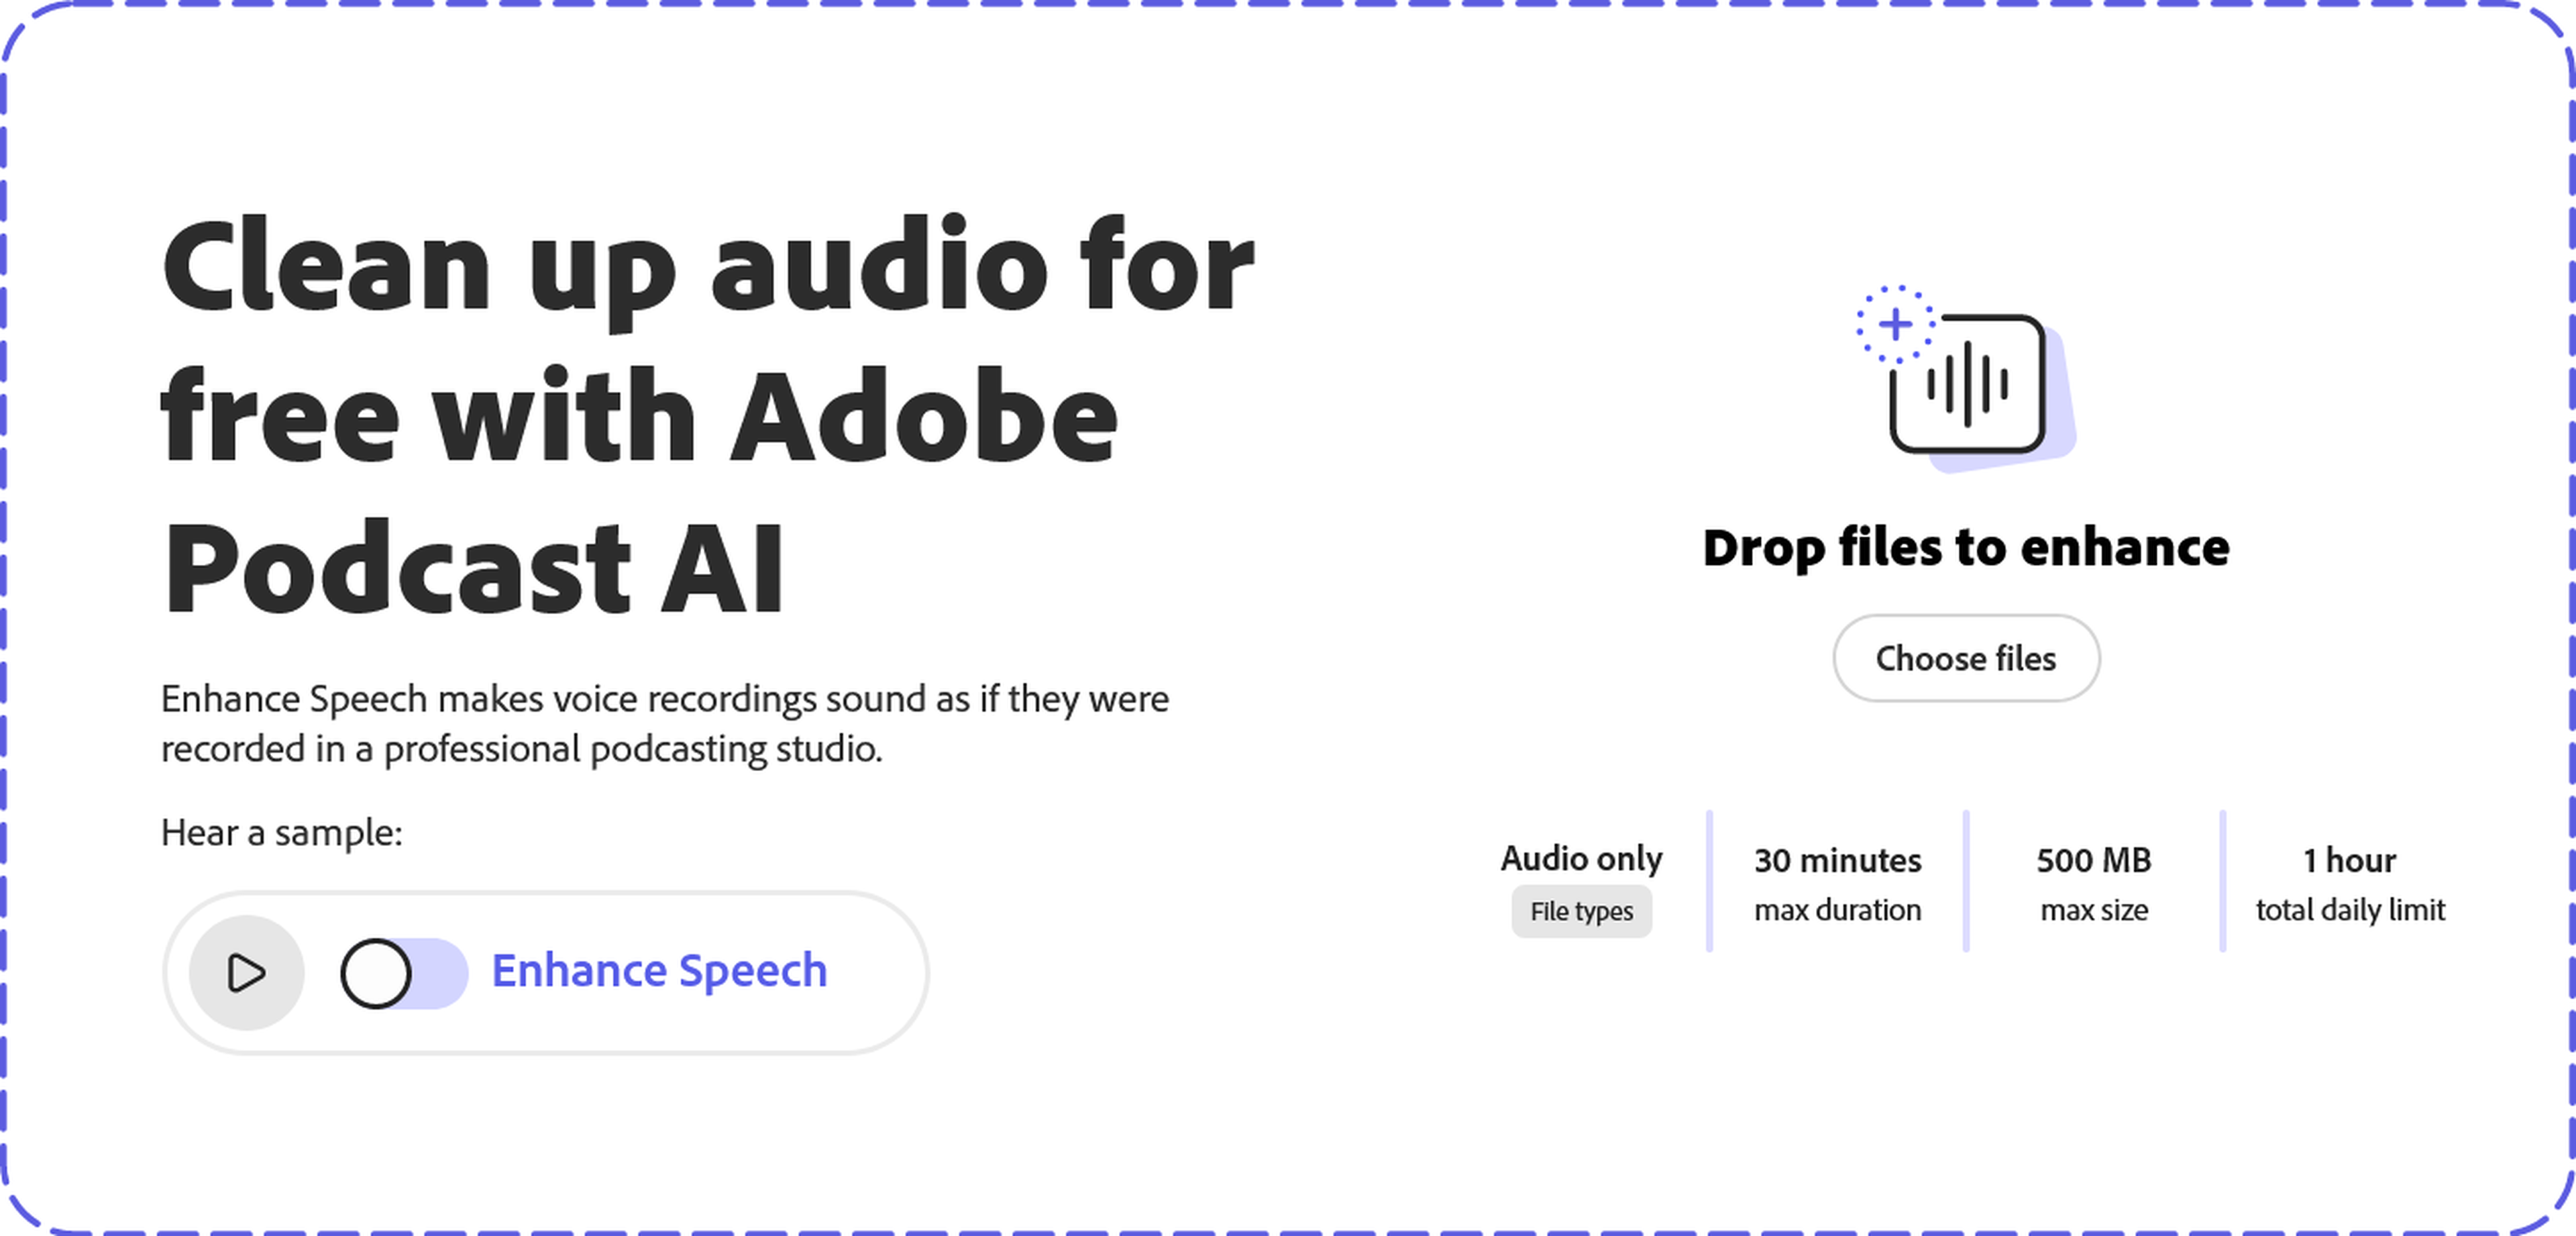 Adobe Podcast mejora audio sonido con IA